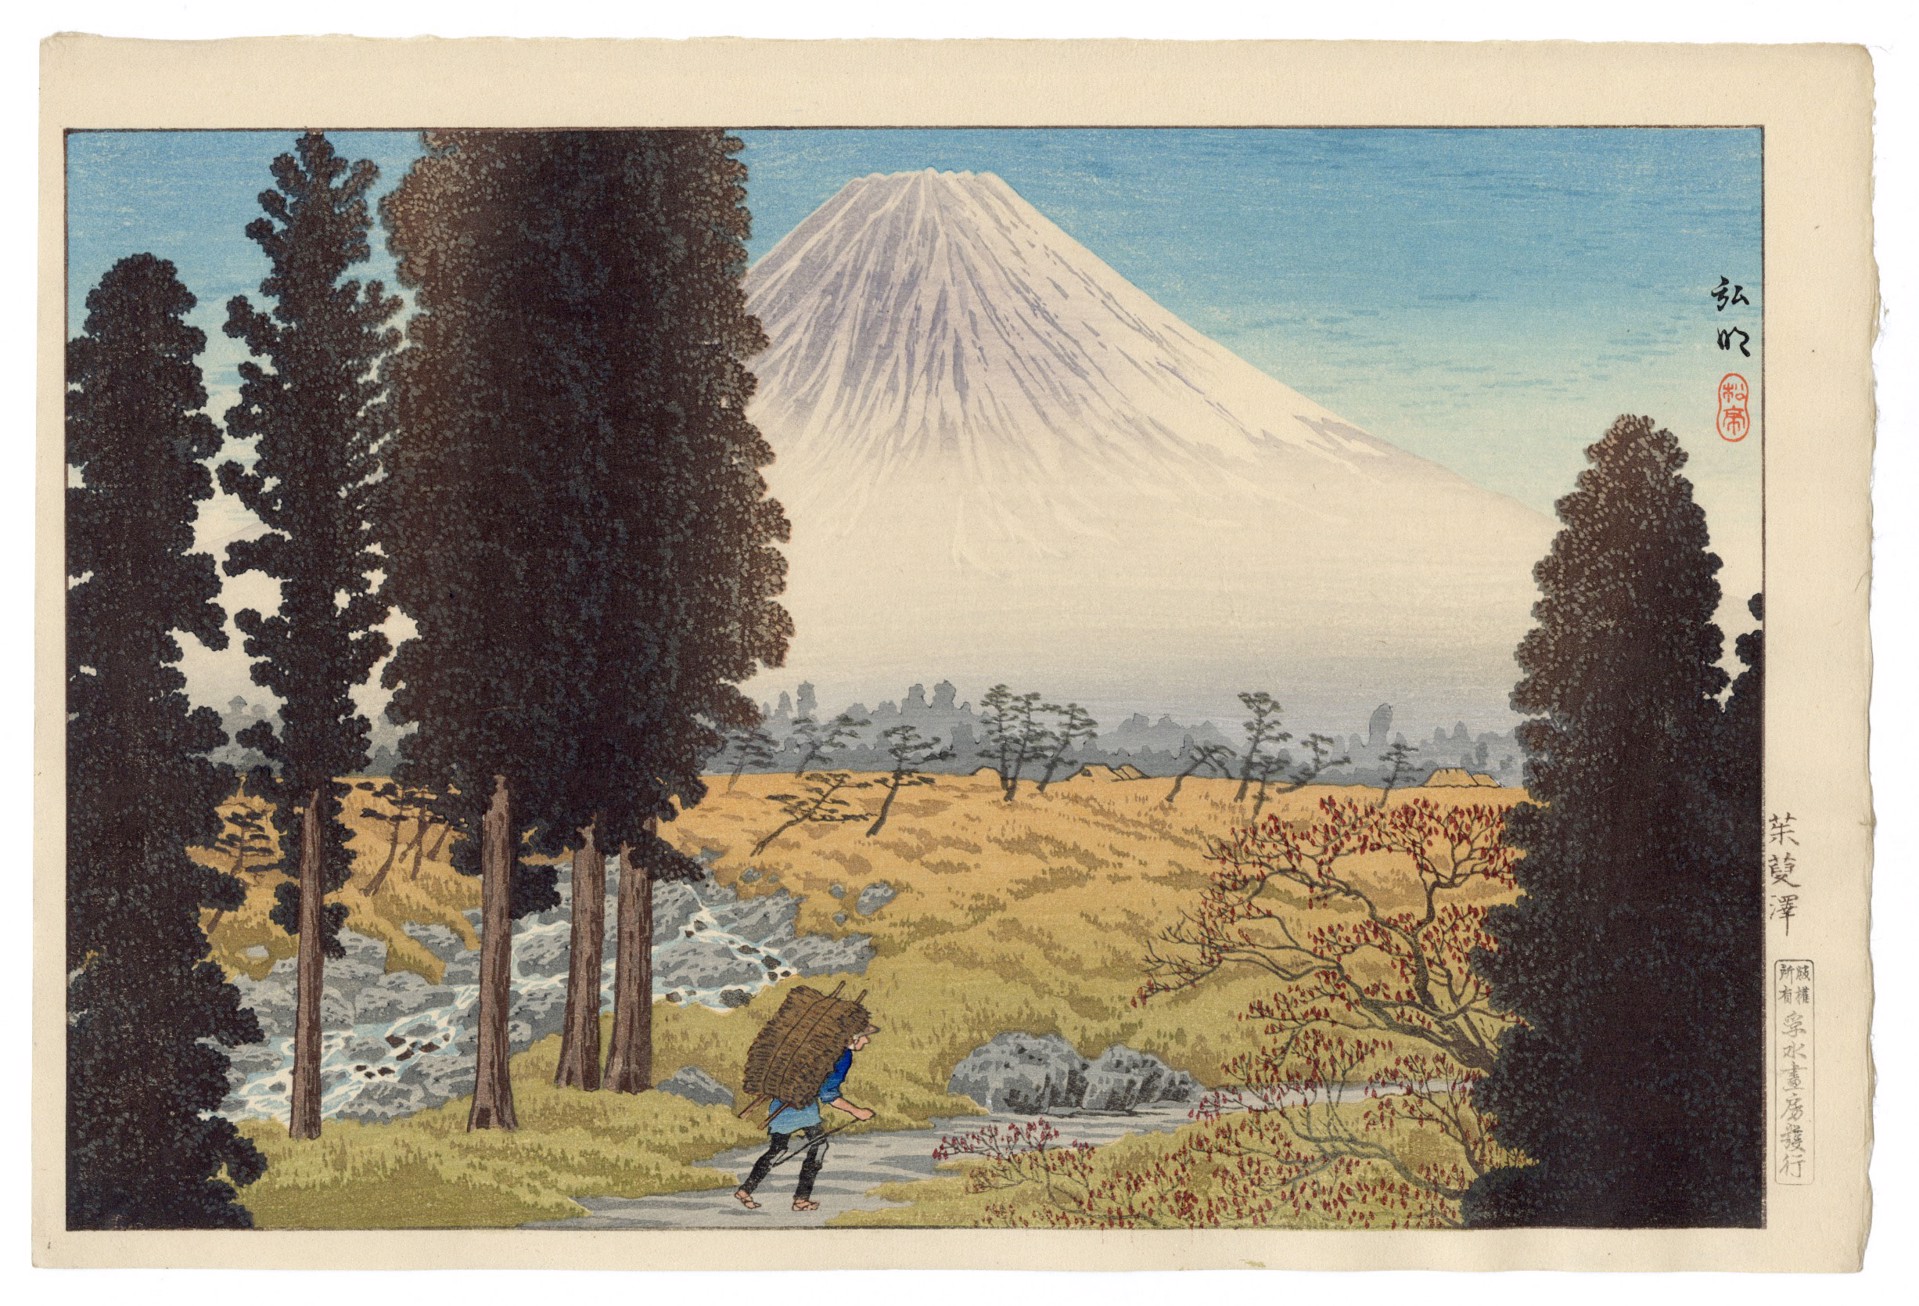 Fuji from Gumisawa Mt. Fuji in the Four Seasons by Takahashi Hiroaki